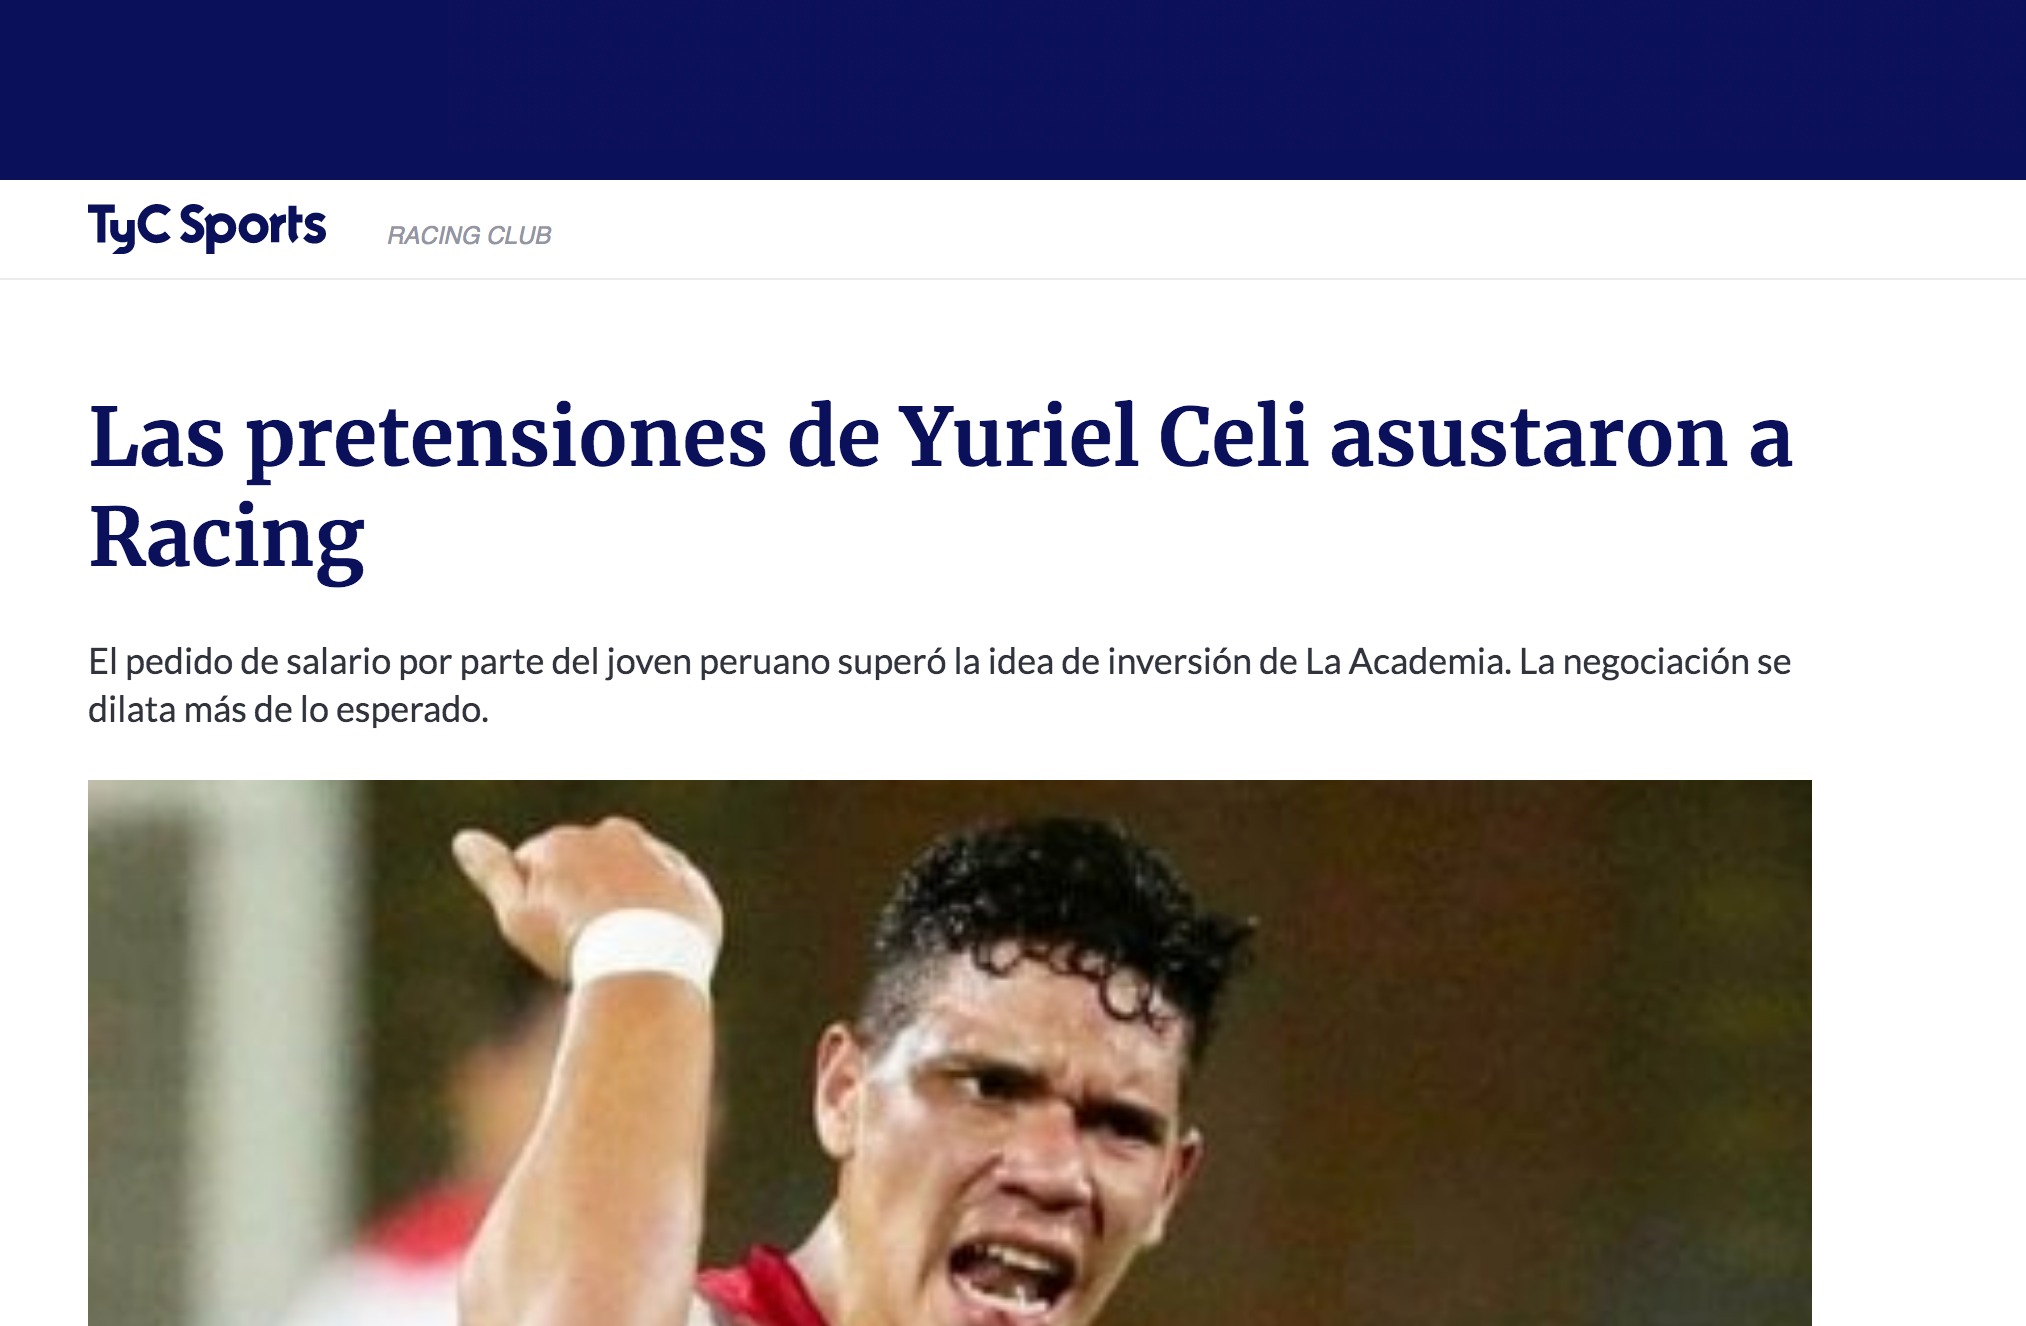 TyC Sports tituló así su nota sobre Yuriel Celi.